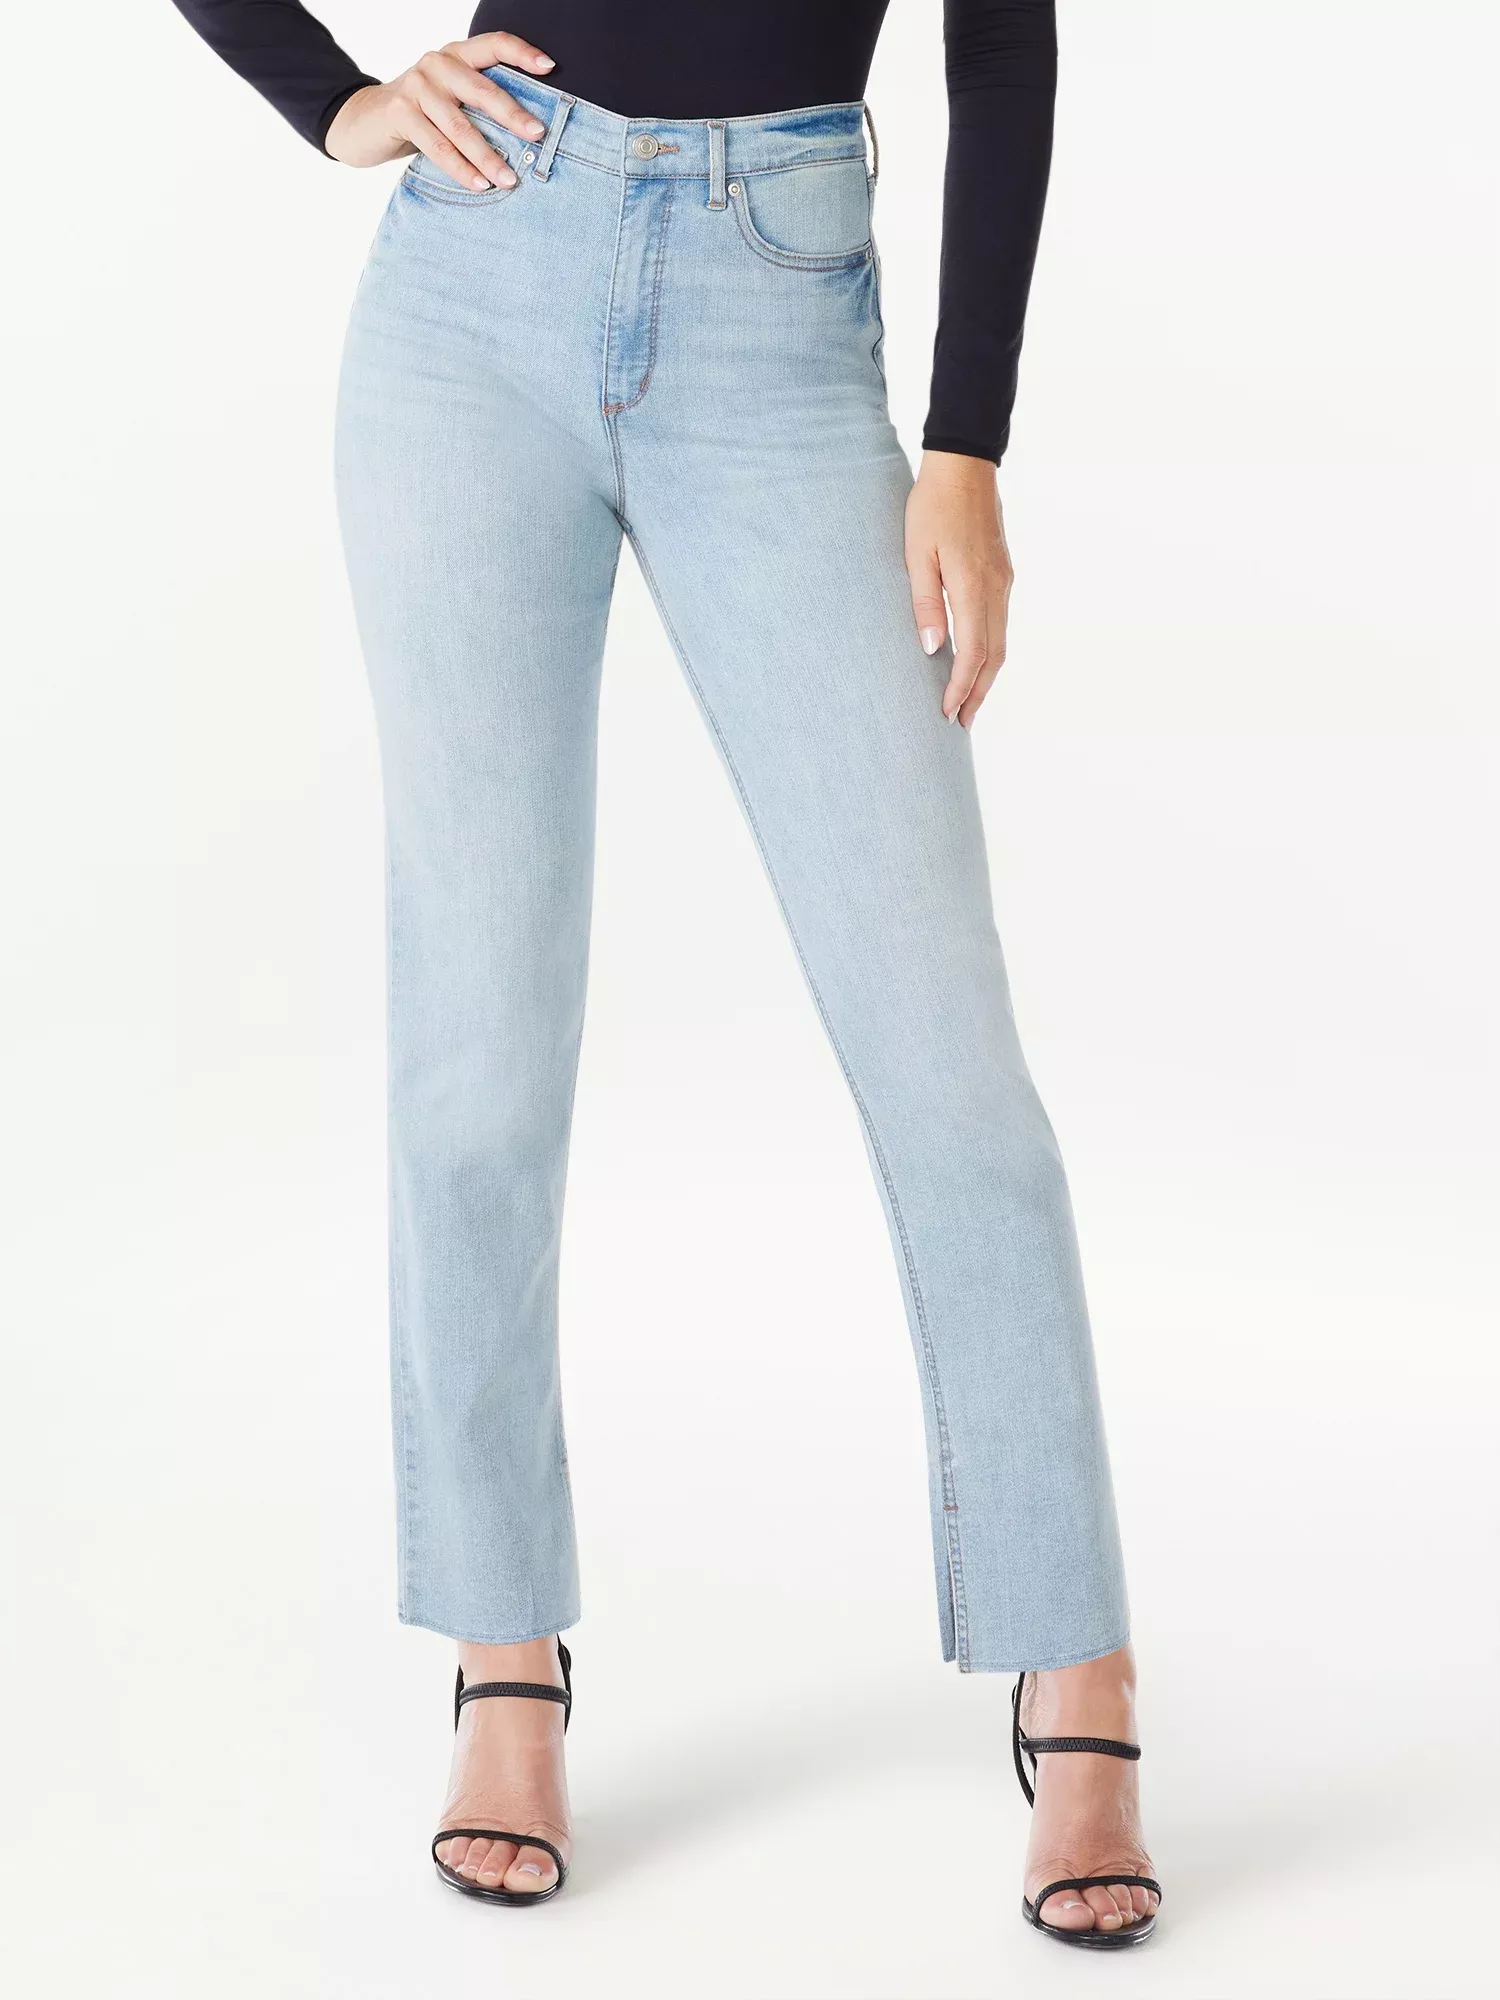 Sofia Jeans Women's Eden Straight Super High Rise Faux Leather Pants, 30.5  Inseam, Sizes 2-20 